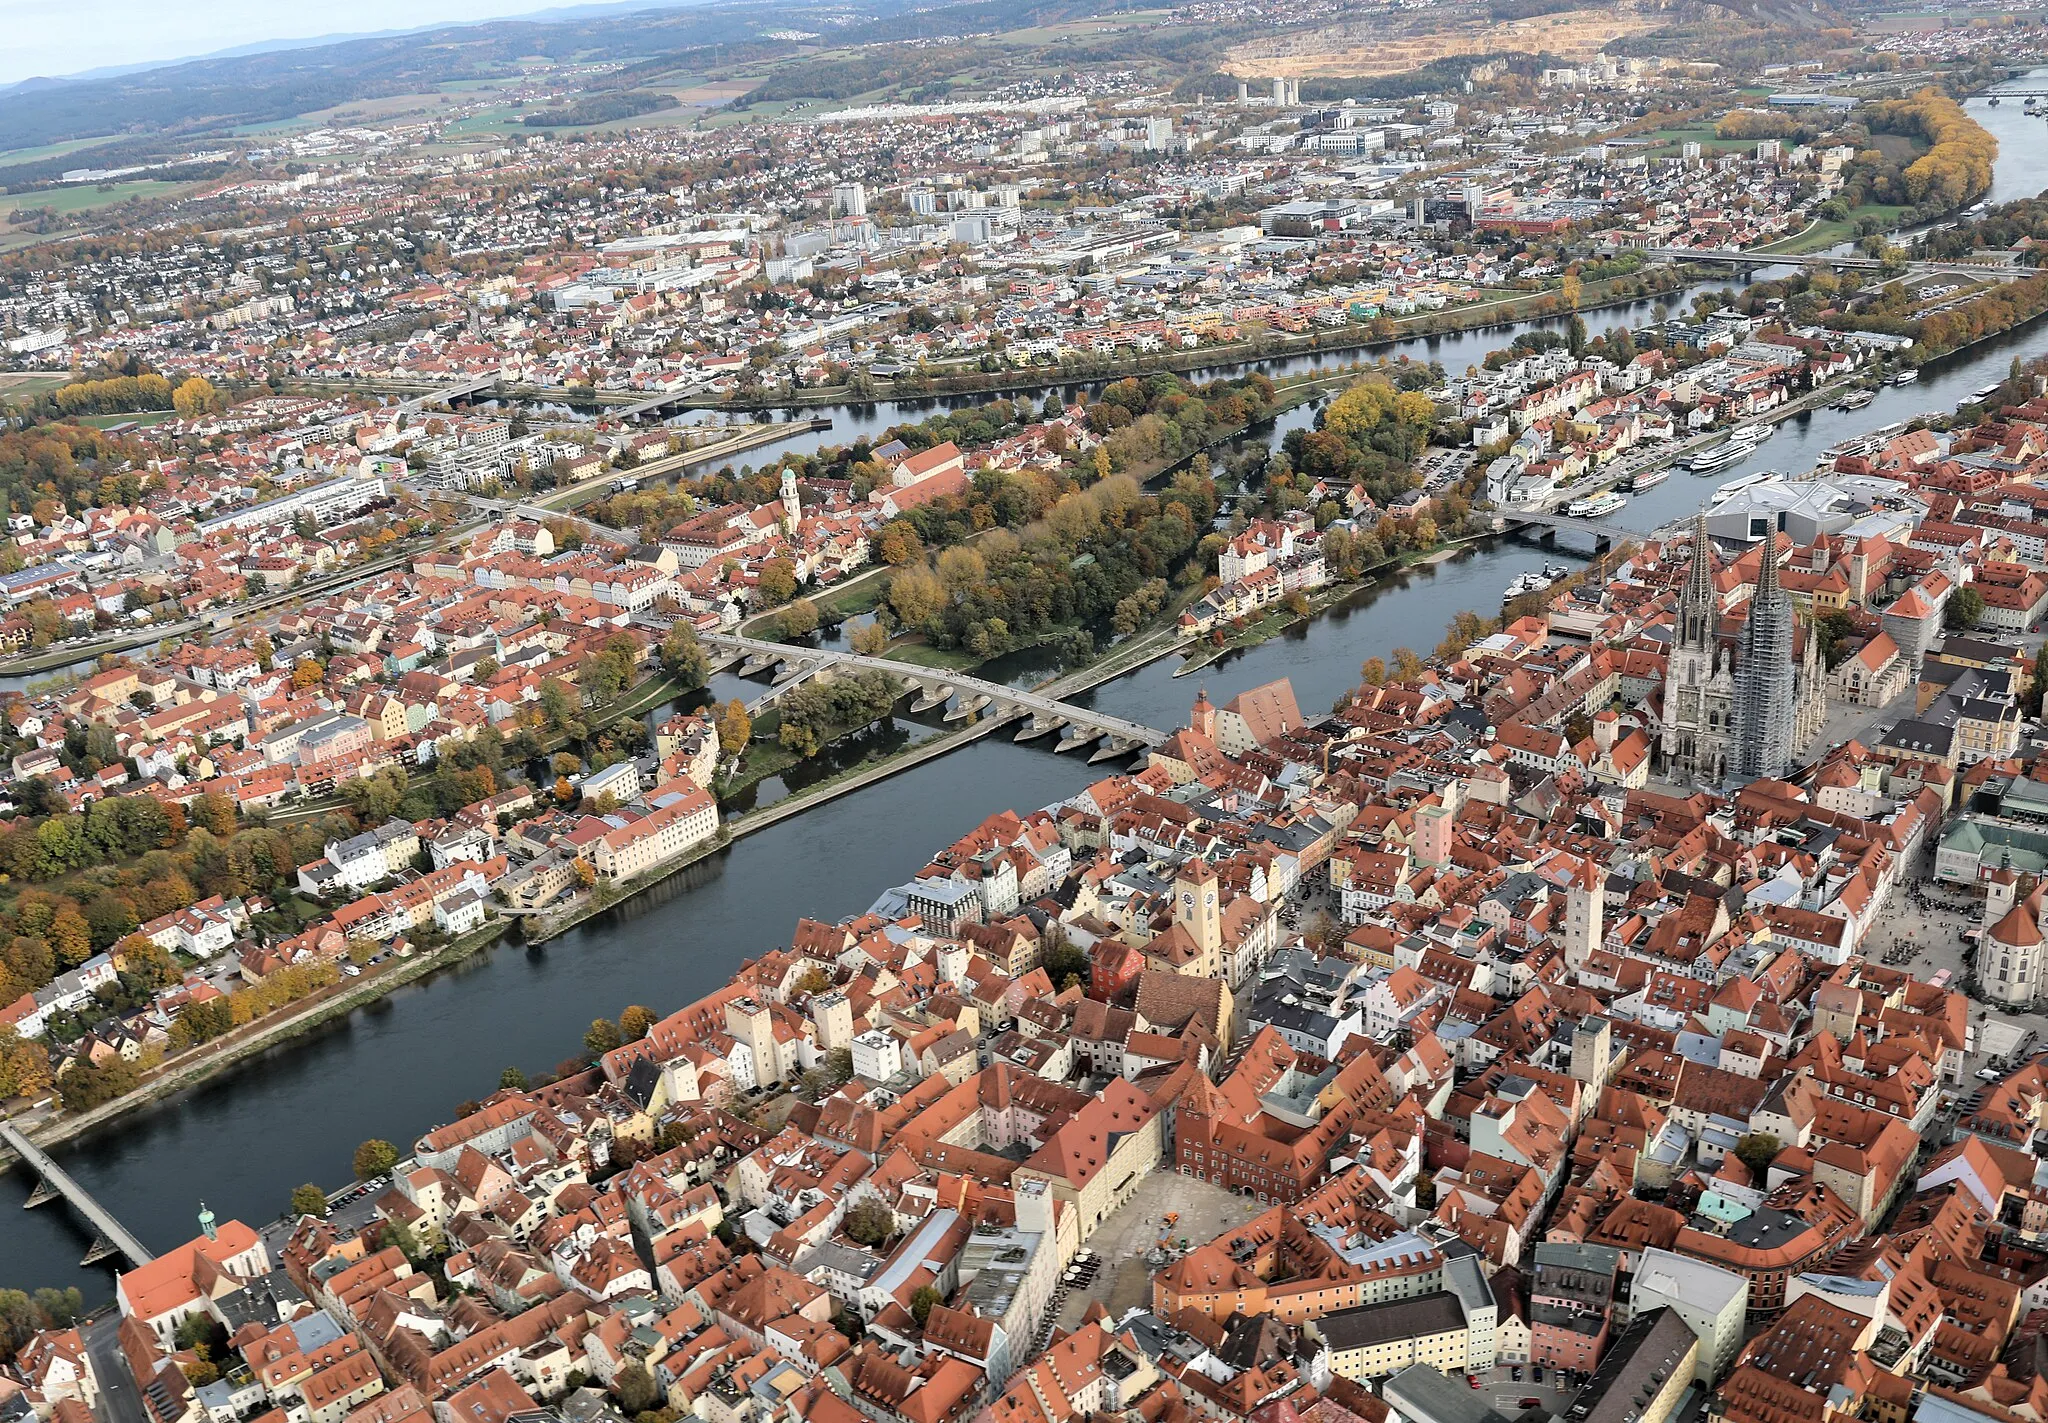 Image of Regensburg